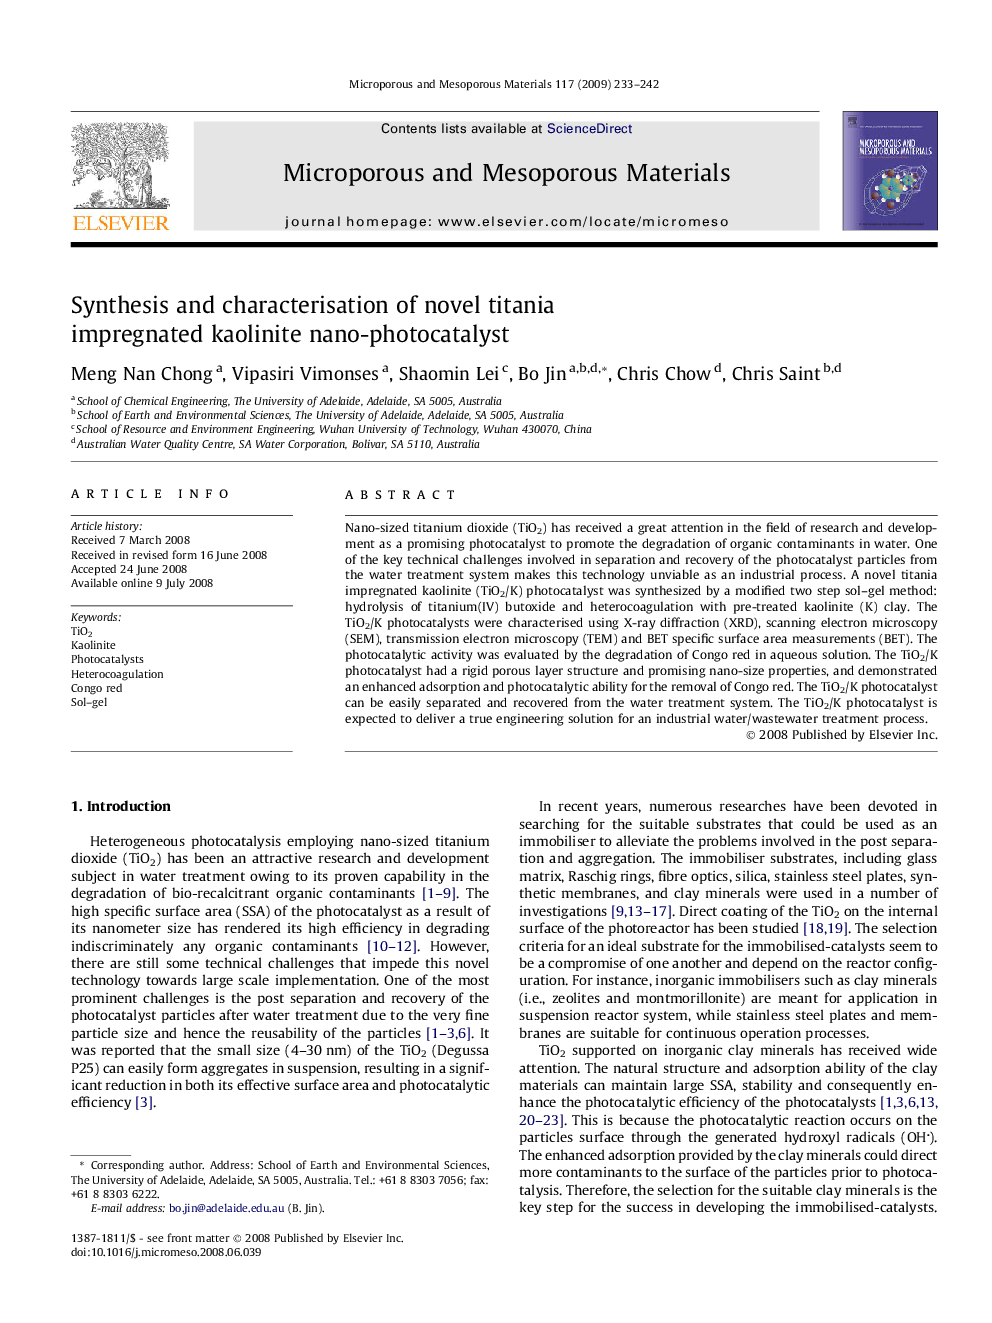 Synthesis and characterisation of novel titania impregnated kaolinite nano-photocatalyst